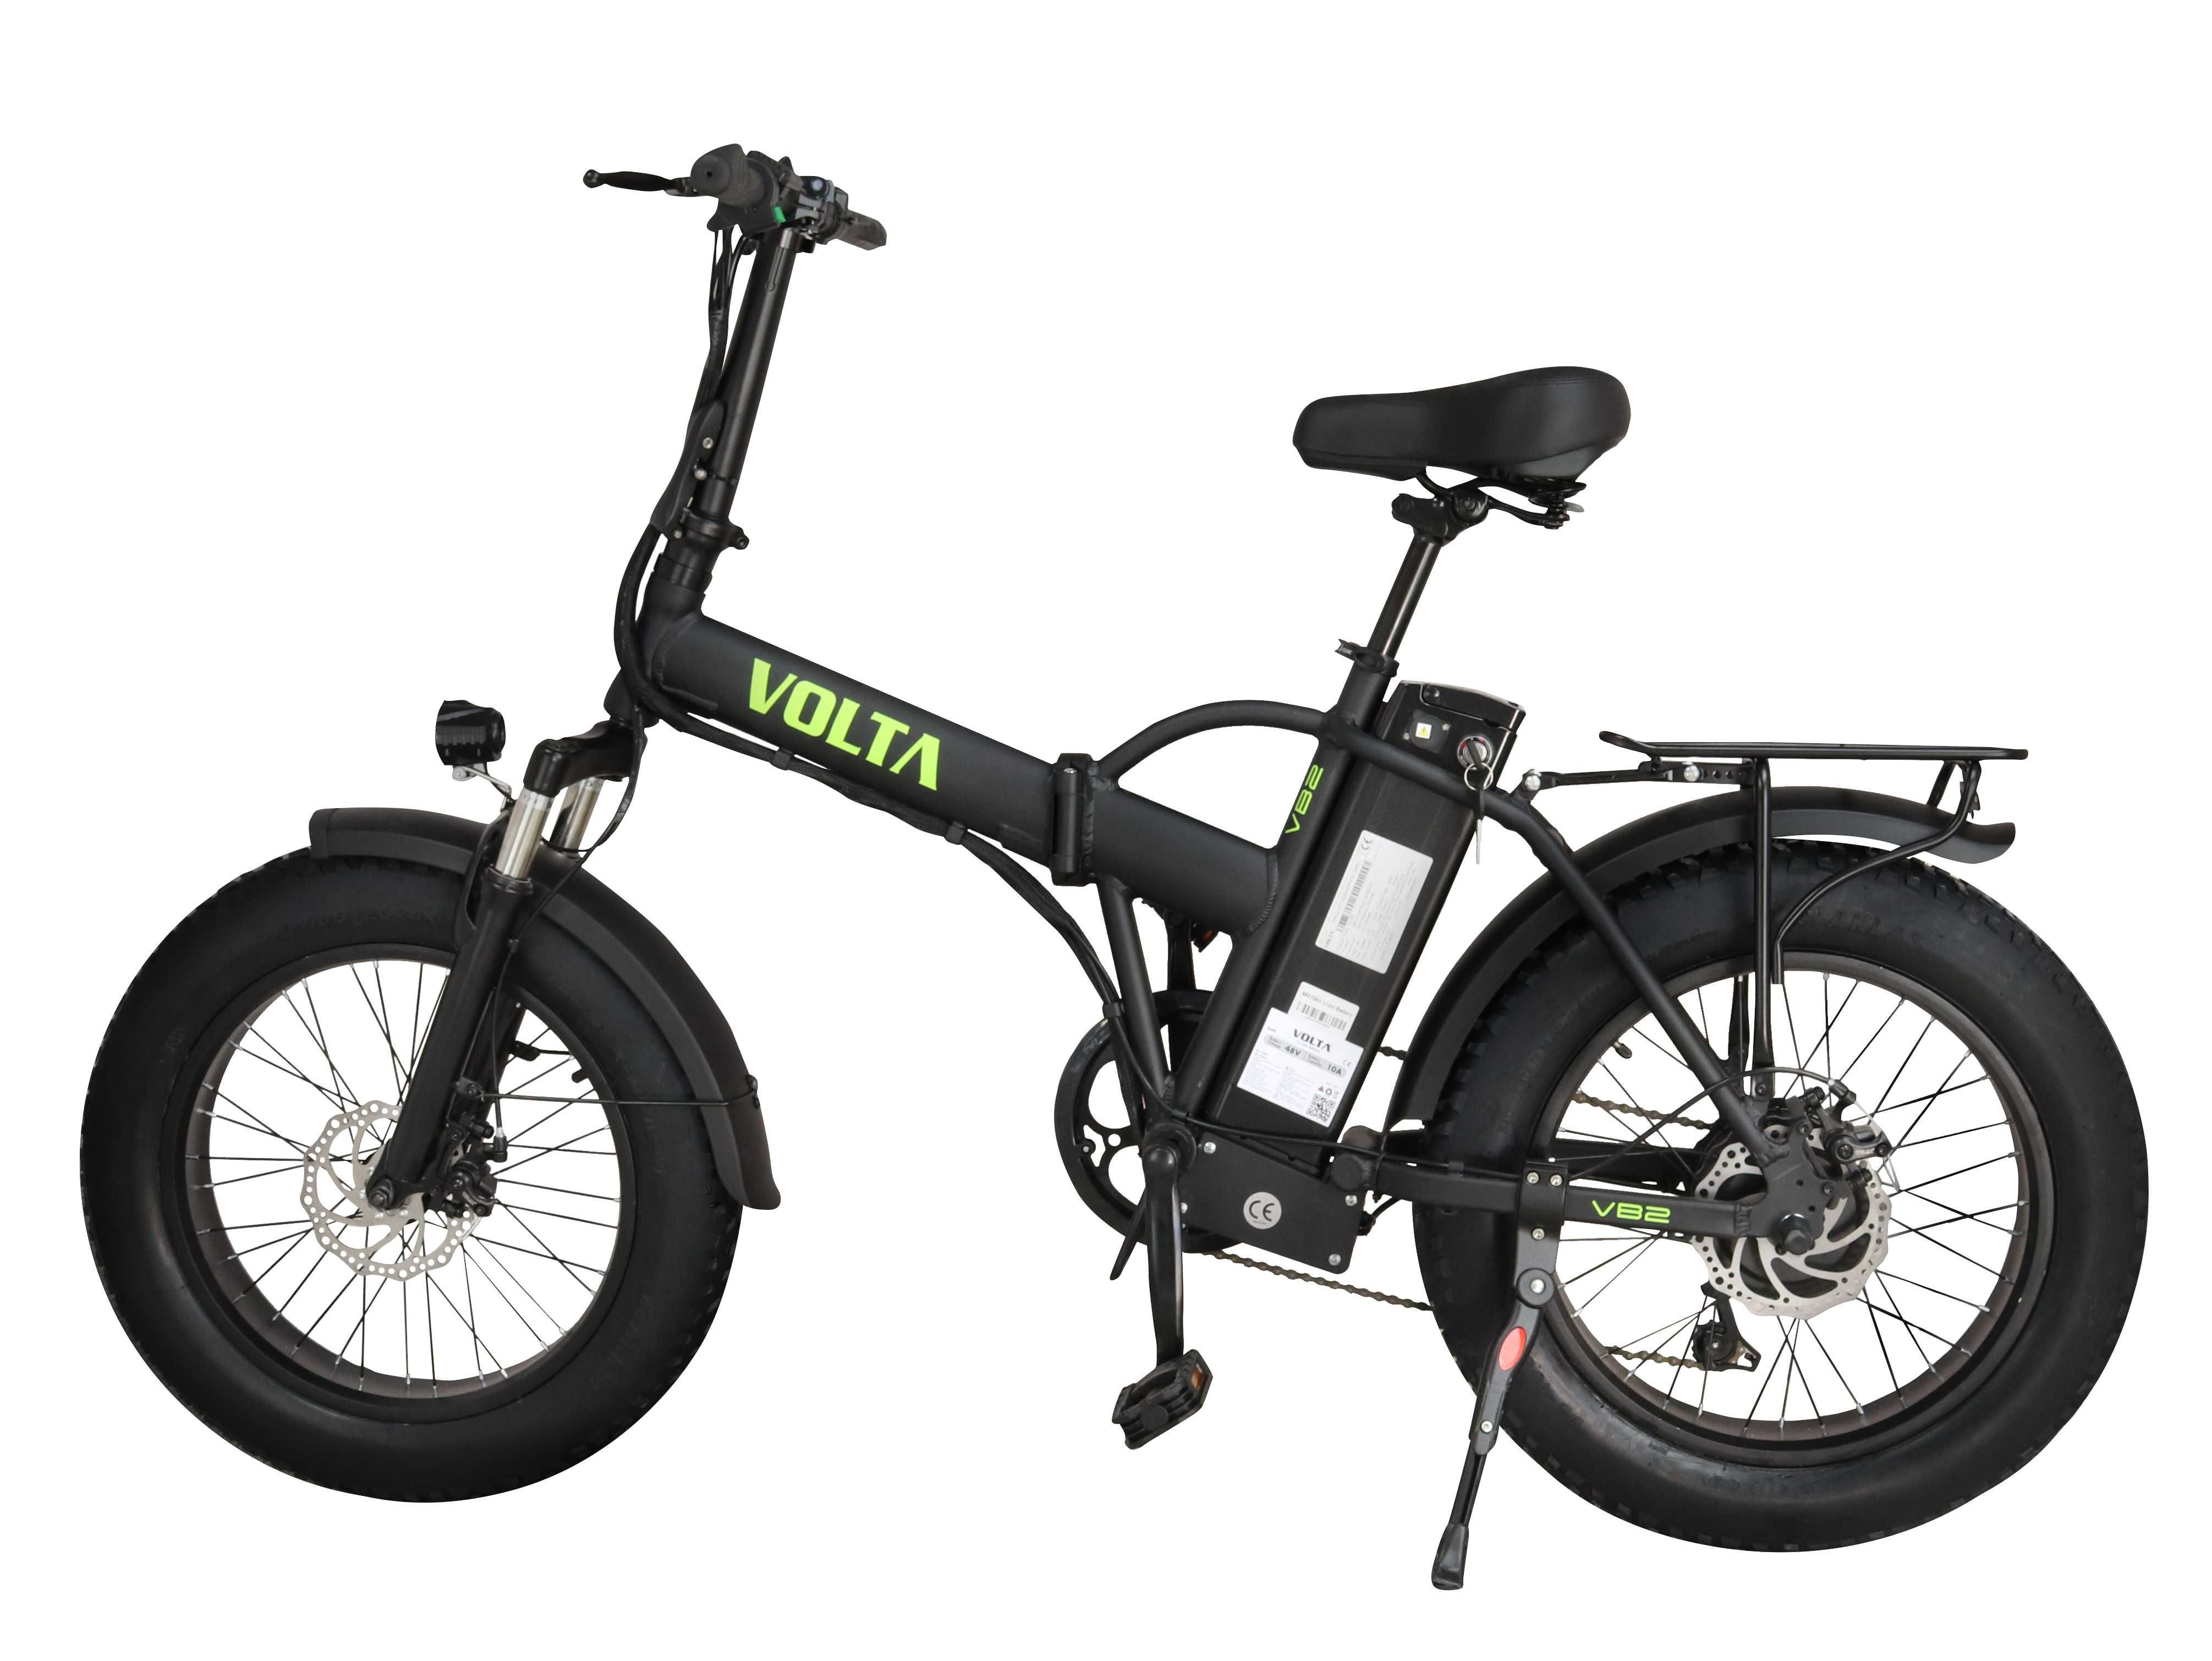 Електрически велосипед Volta VB2 с Shimano скорости 6 степени